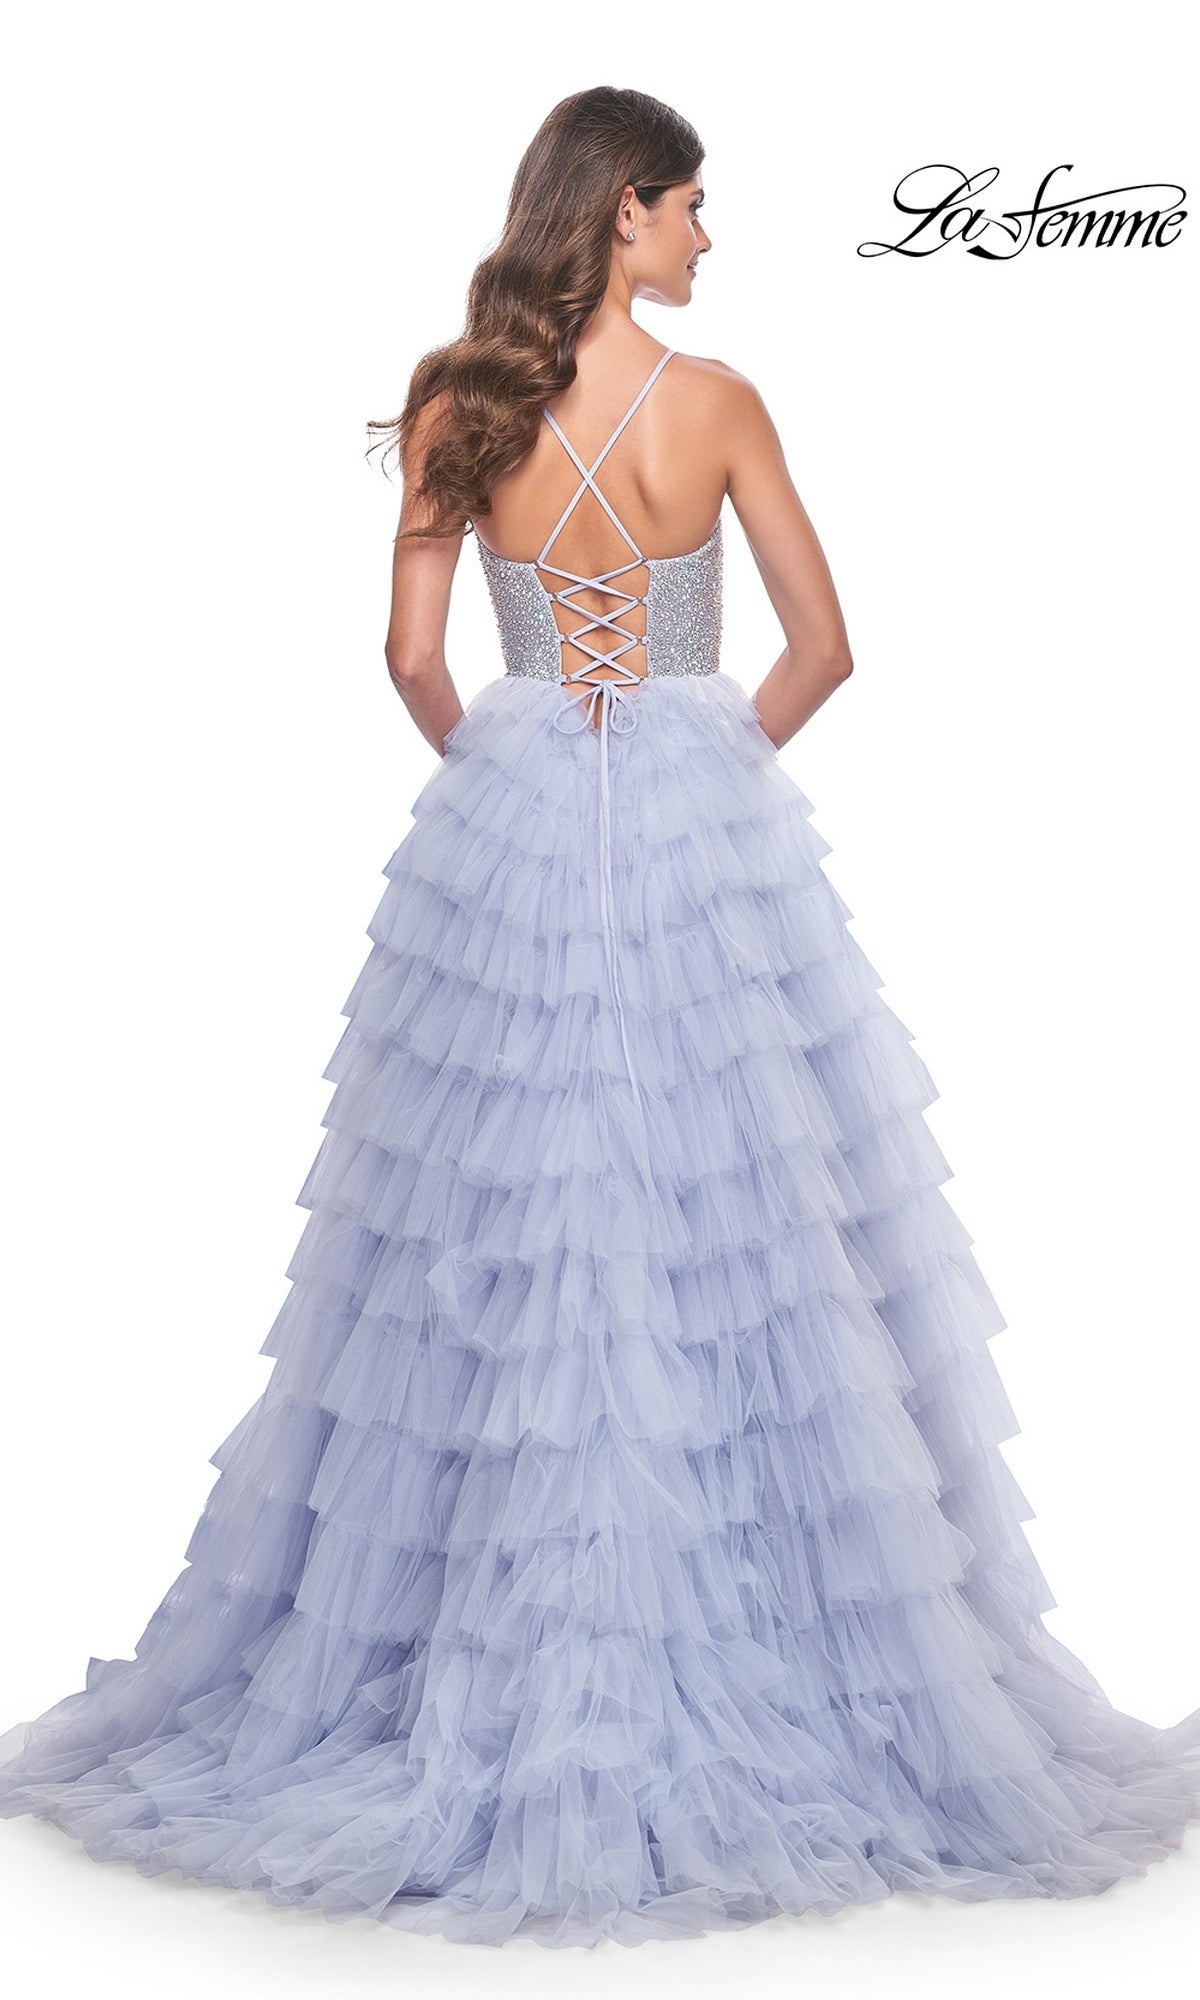  La Femme 32335 Formal Prom Dress